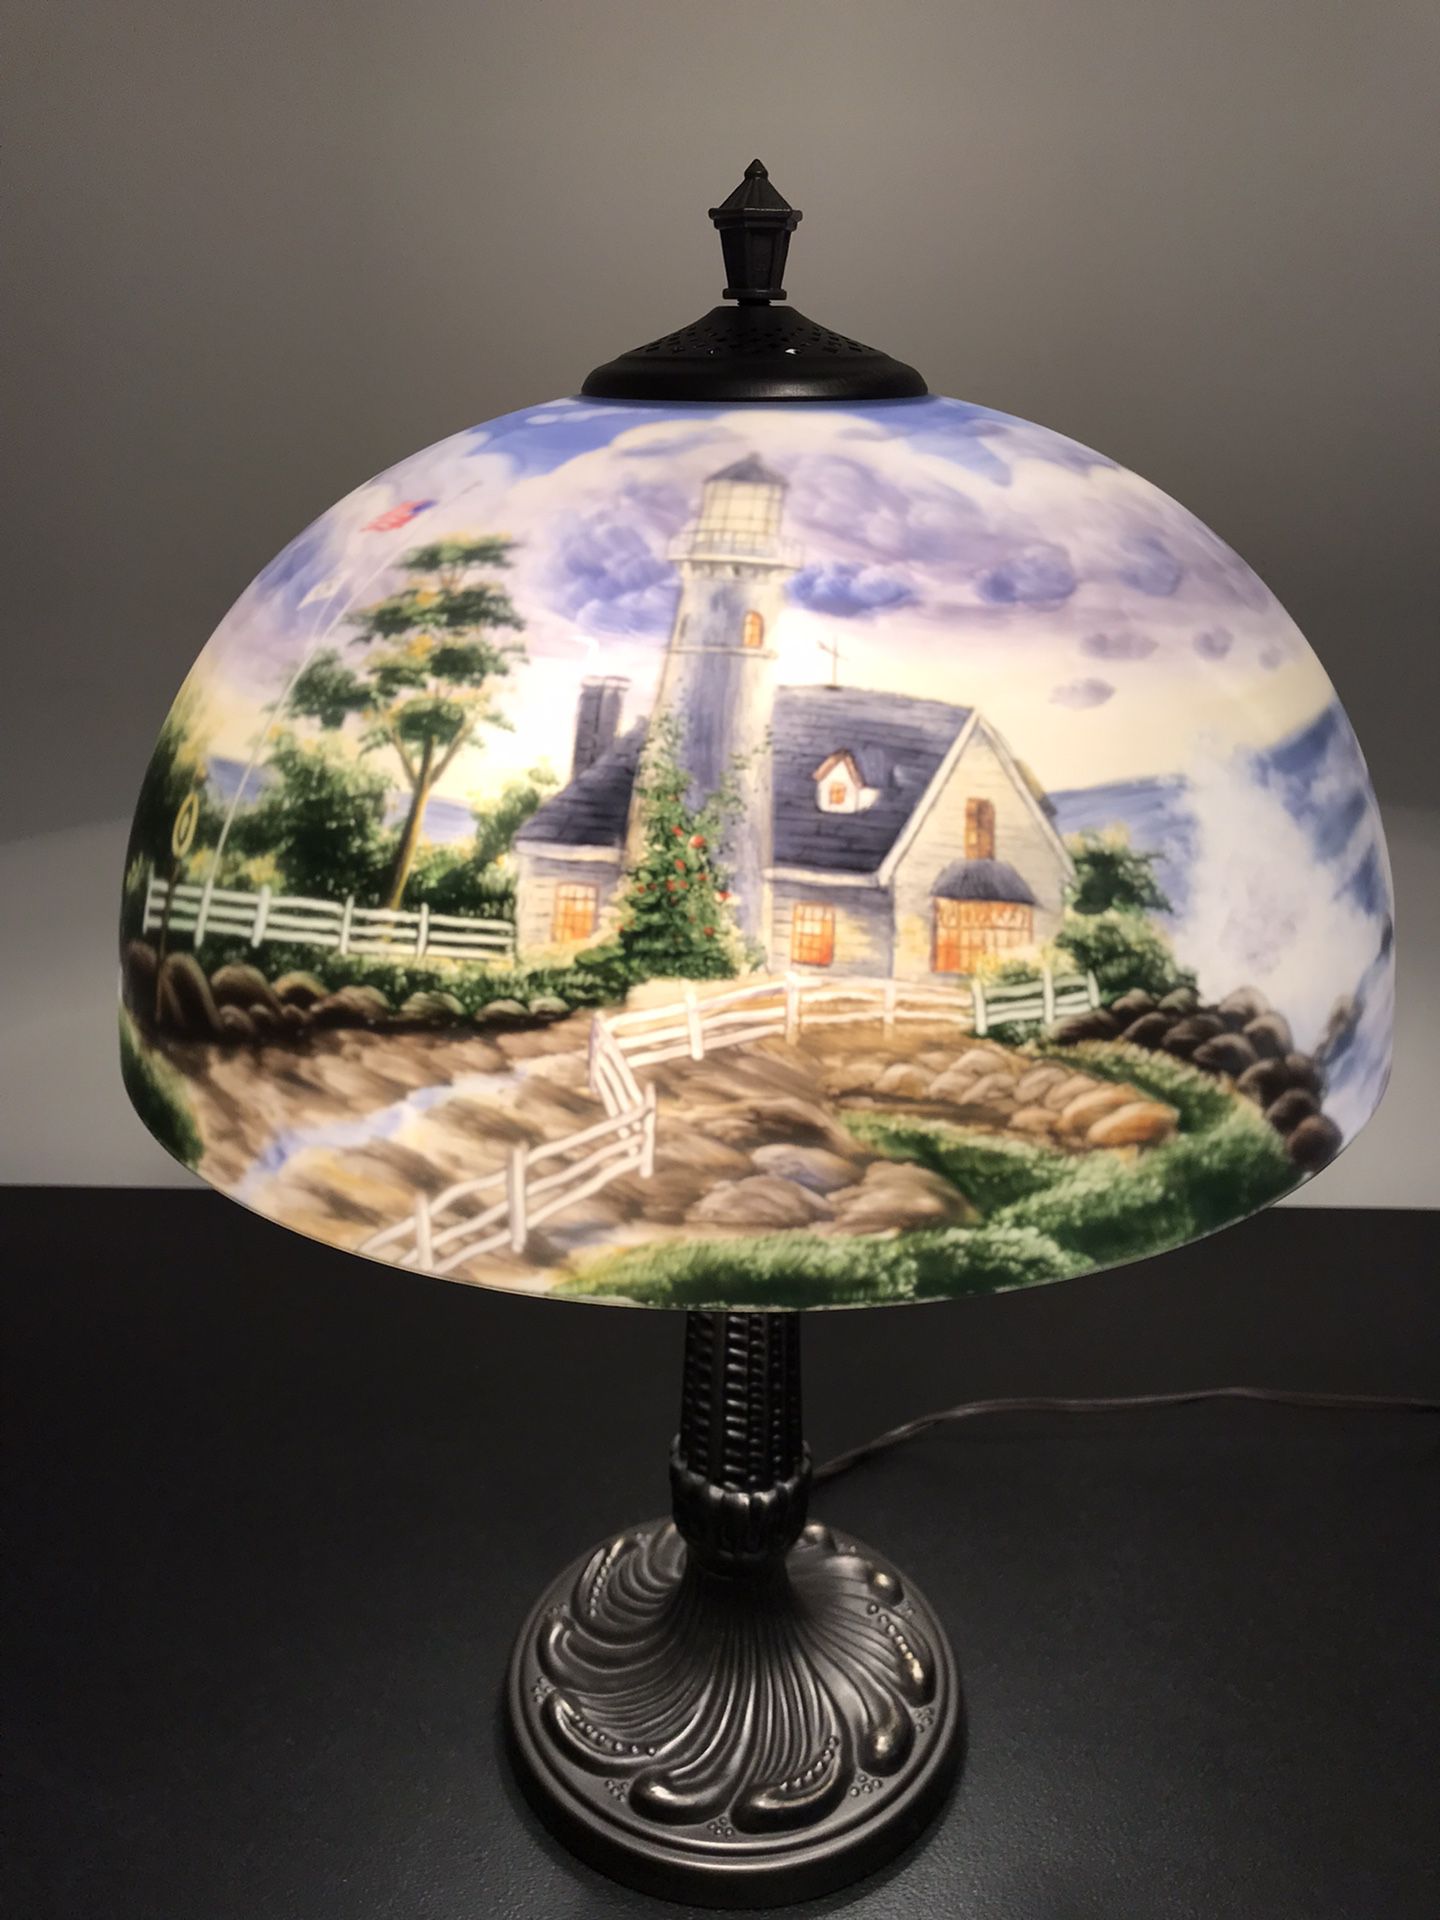 Authentic Thomas Kincaid reverse painted lamp.